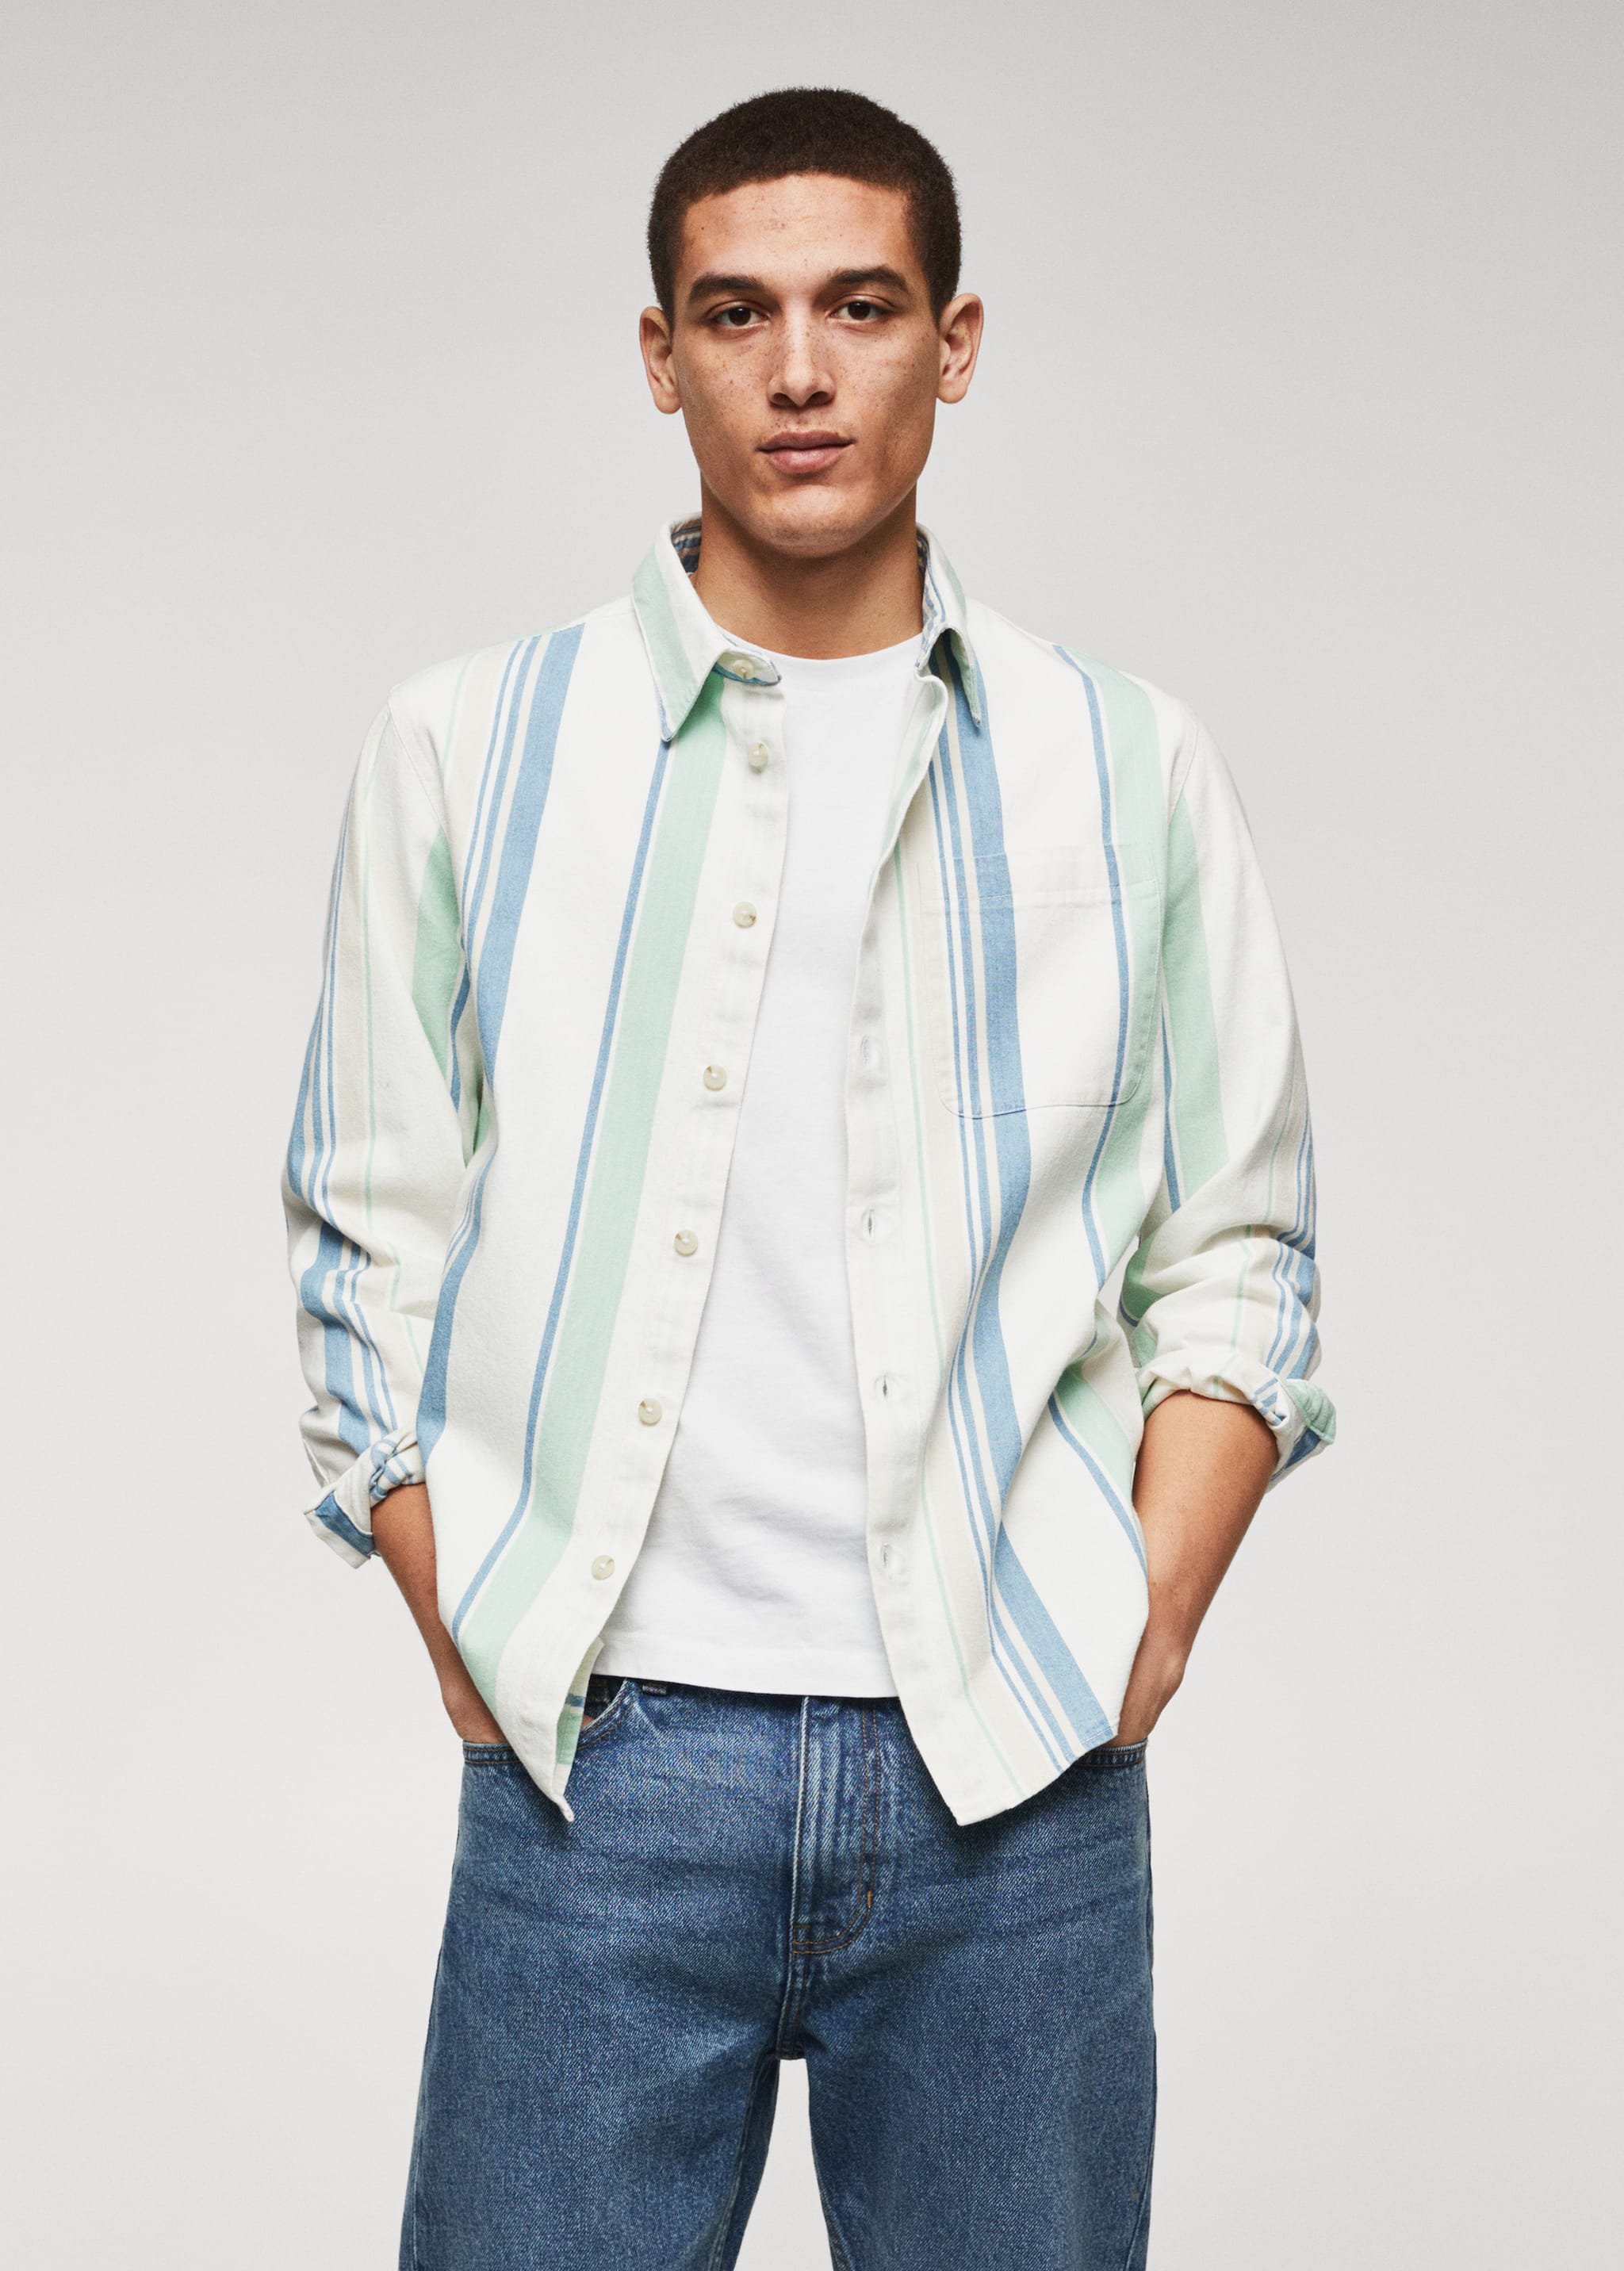 100% cotton striped shirt - Medium plane